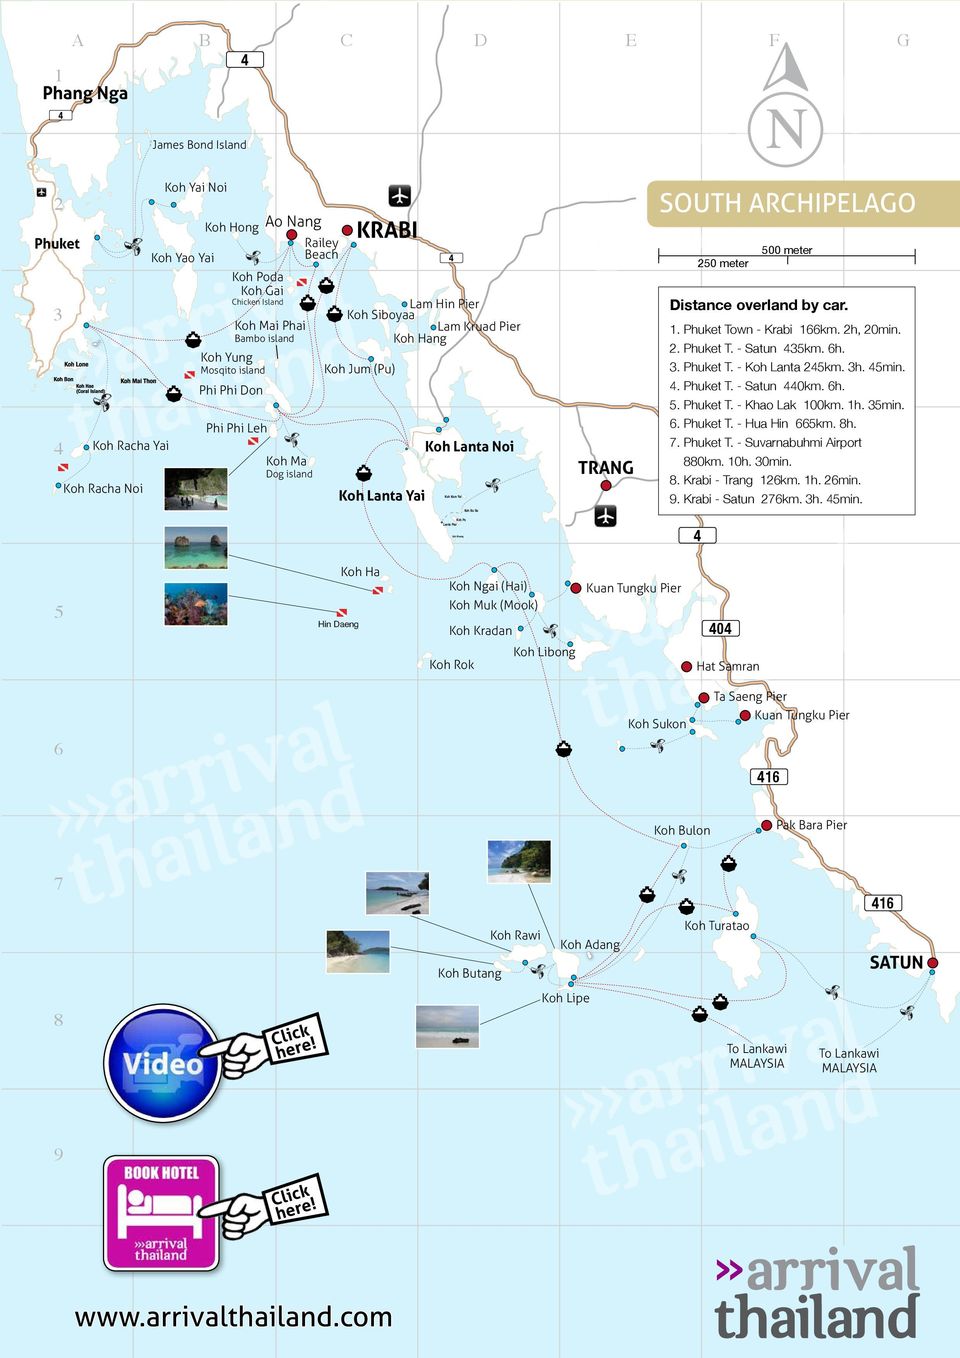 TRANG SOUTH ARCHIPELAGO 500 meter 250 meter Distance overland by car. 1. Phuket Town - Krabi 166km. 2h, 20min. 2. Phuket T. - Satun 435km. 6h. 3. Phuket T. - Koh Lanta 245km. 3h. 45min. 4. Phuket T. - Satun 440km.